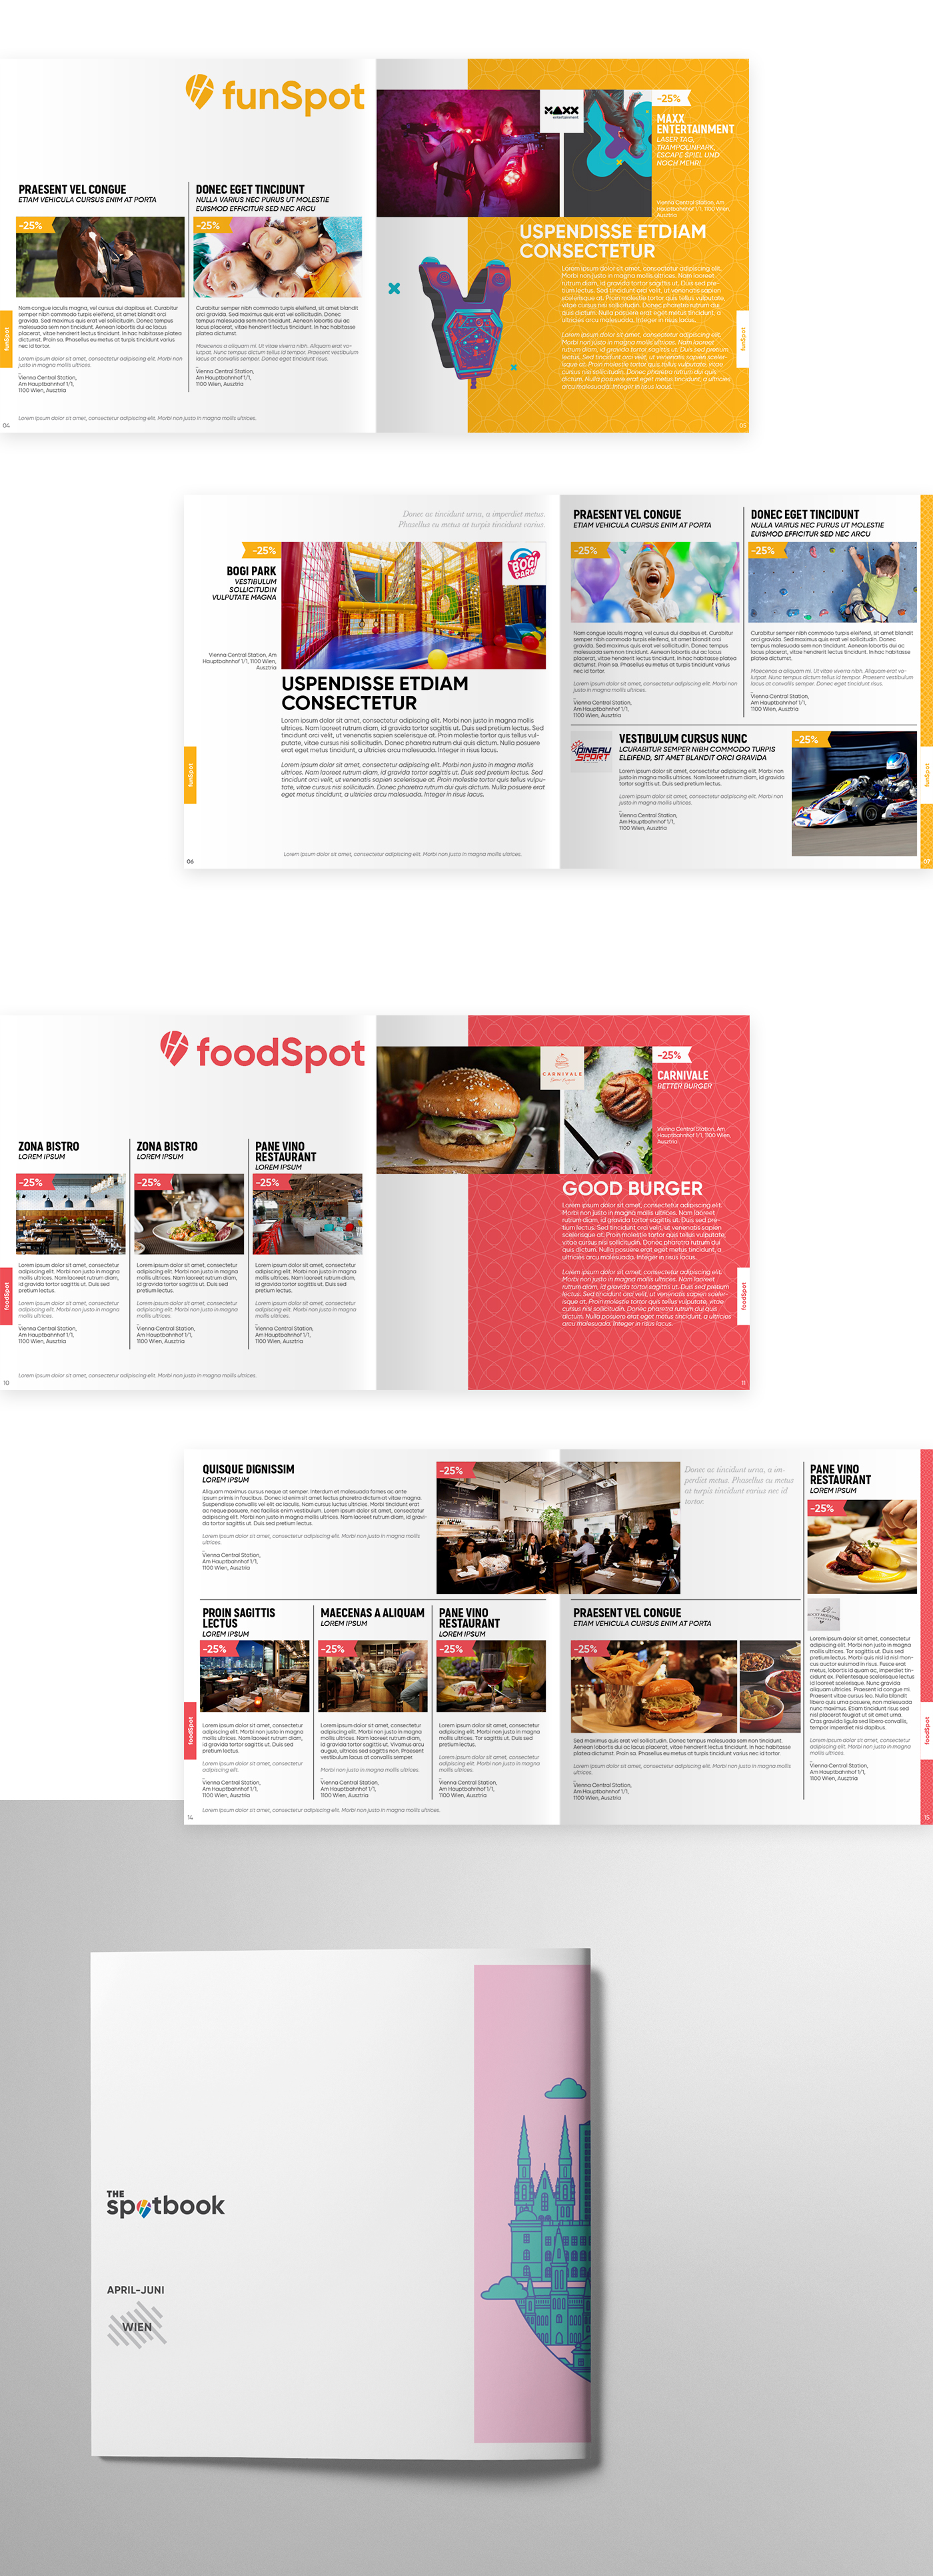 spotbook magazine print wien vienna austria Food  Fun night culture